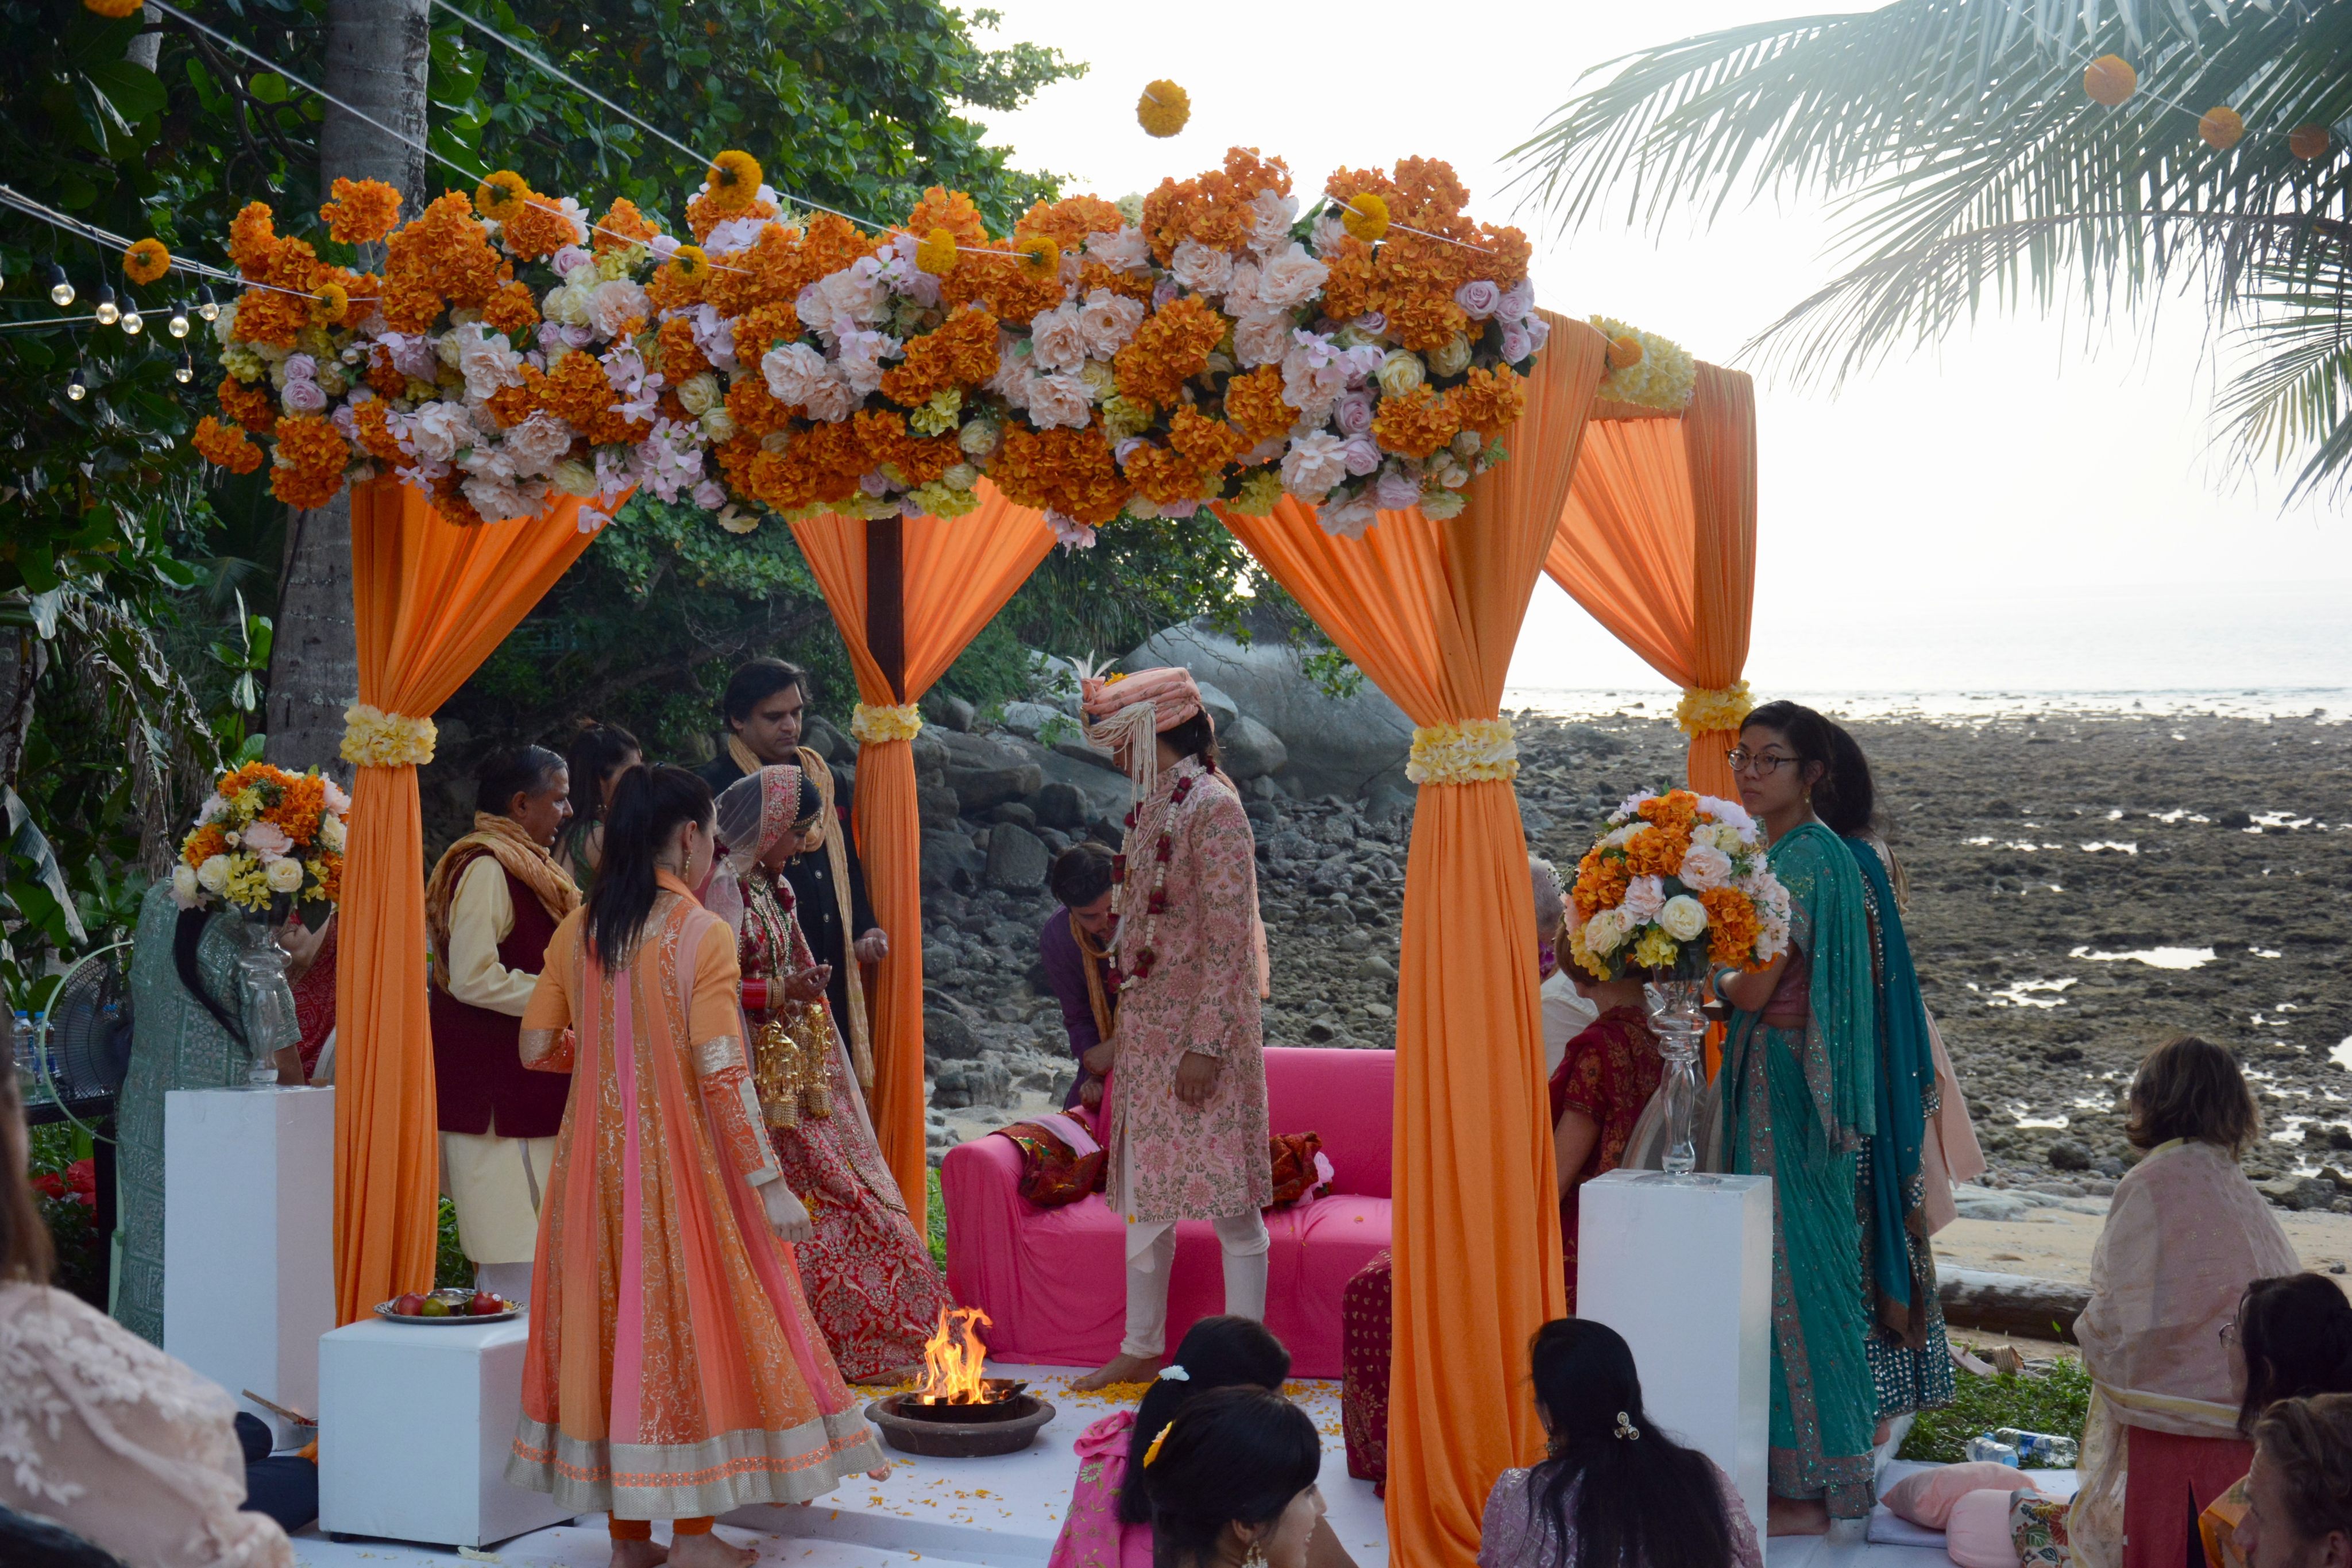 An Indian wedding celebration in Phuket, Thailand. Photo: Shutterstock